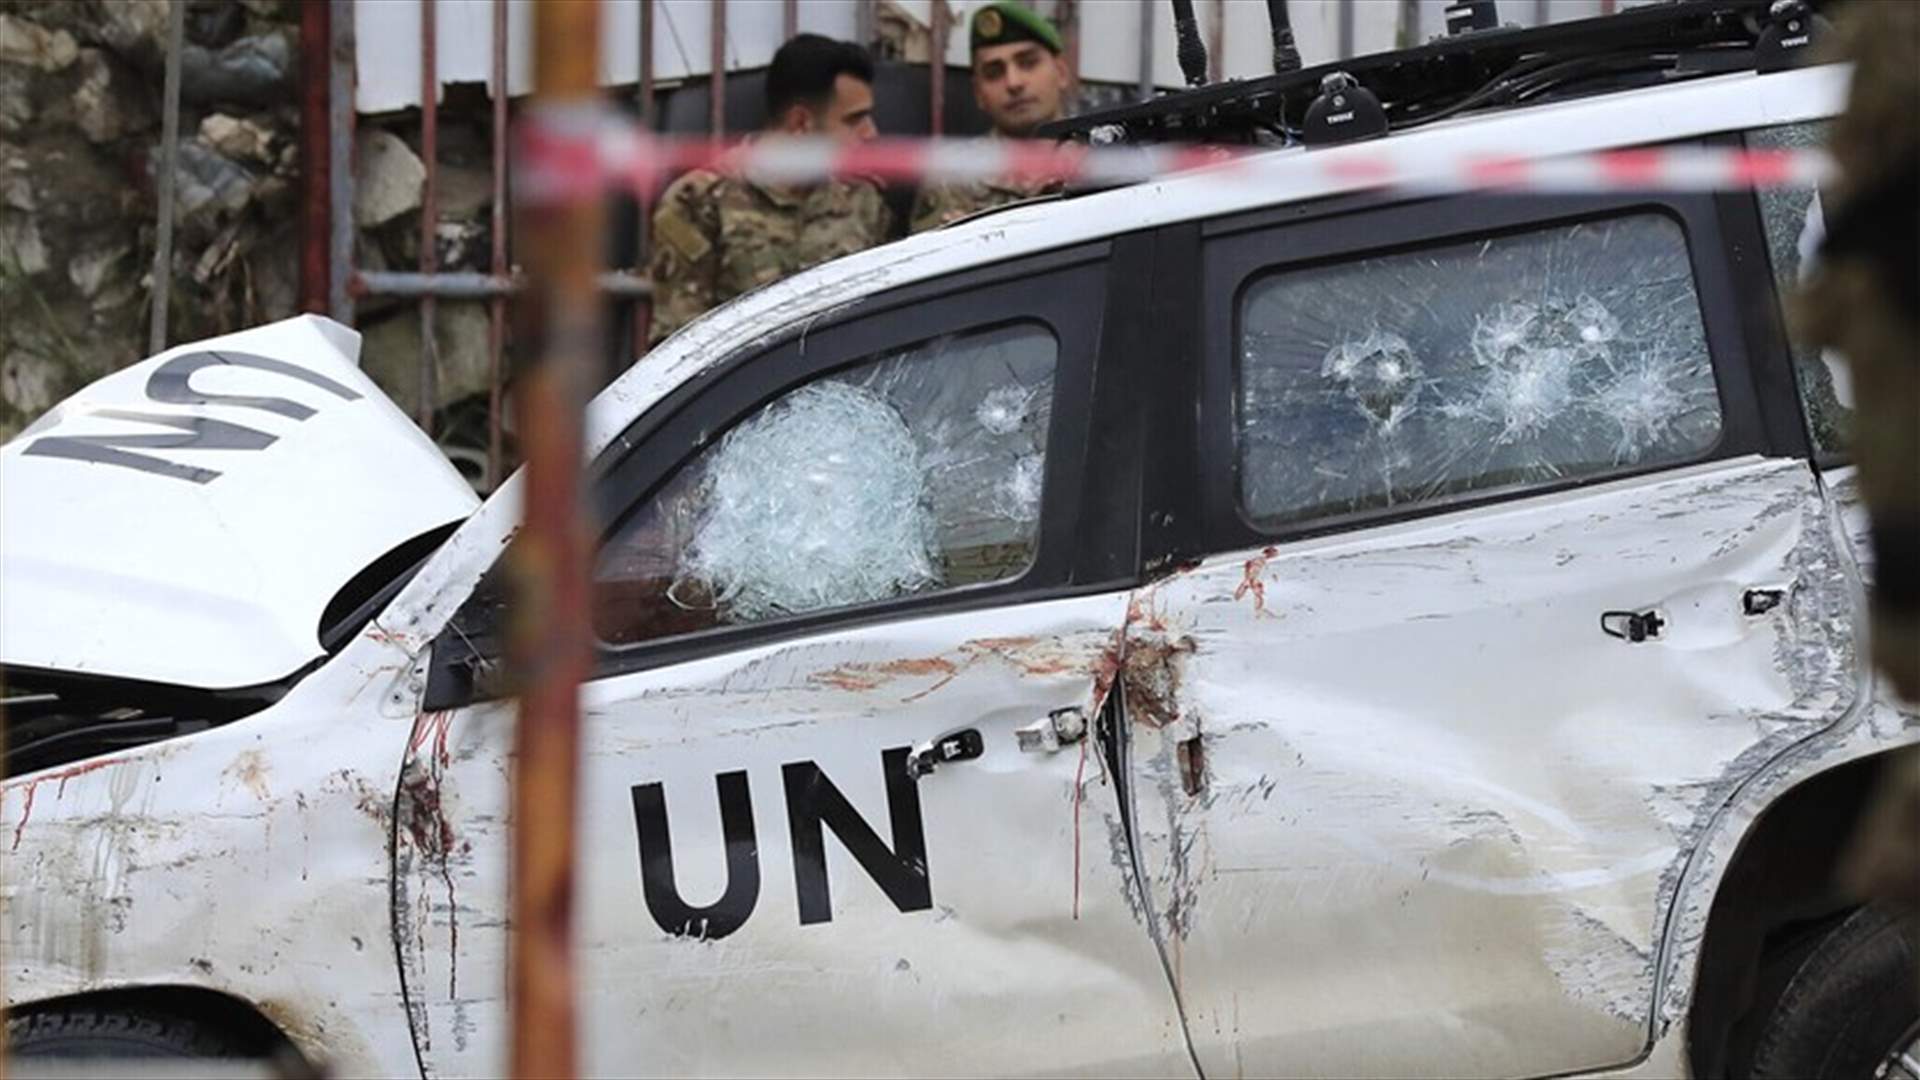 Latest on Al-Aqibya UNIFIL incident: International community demands justice